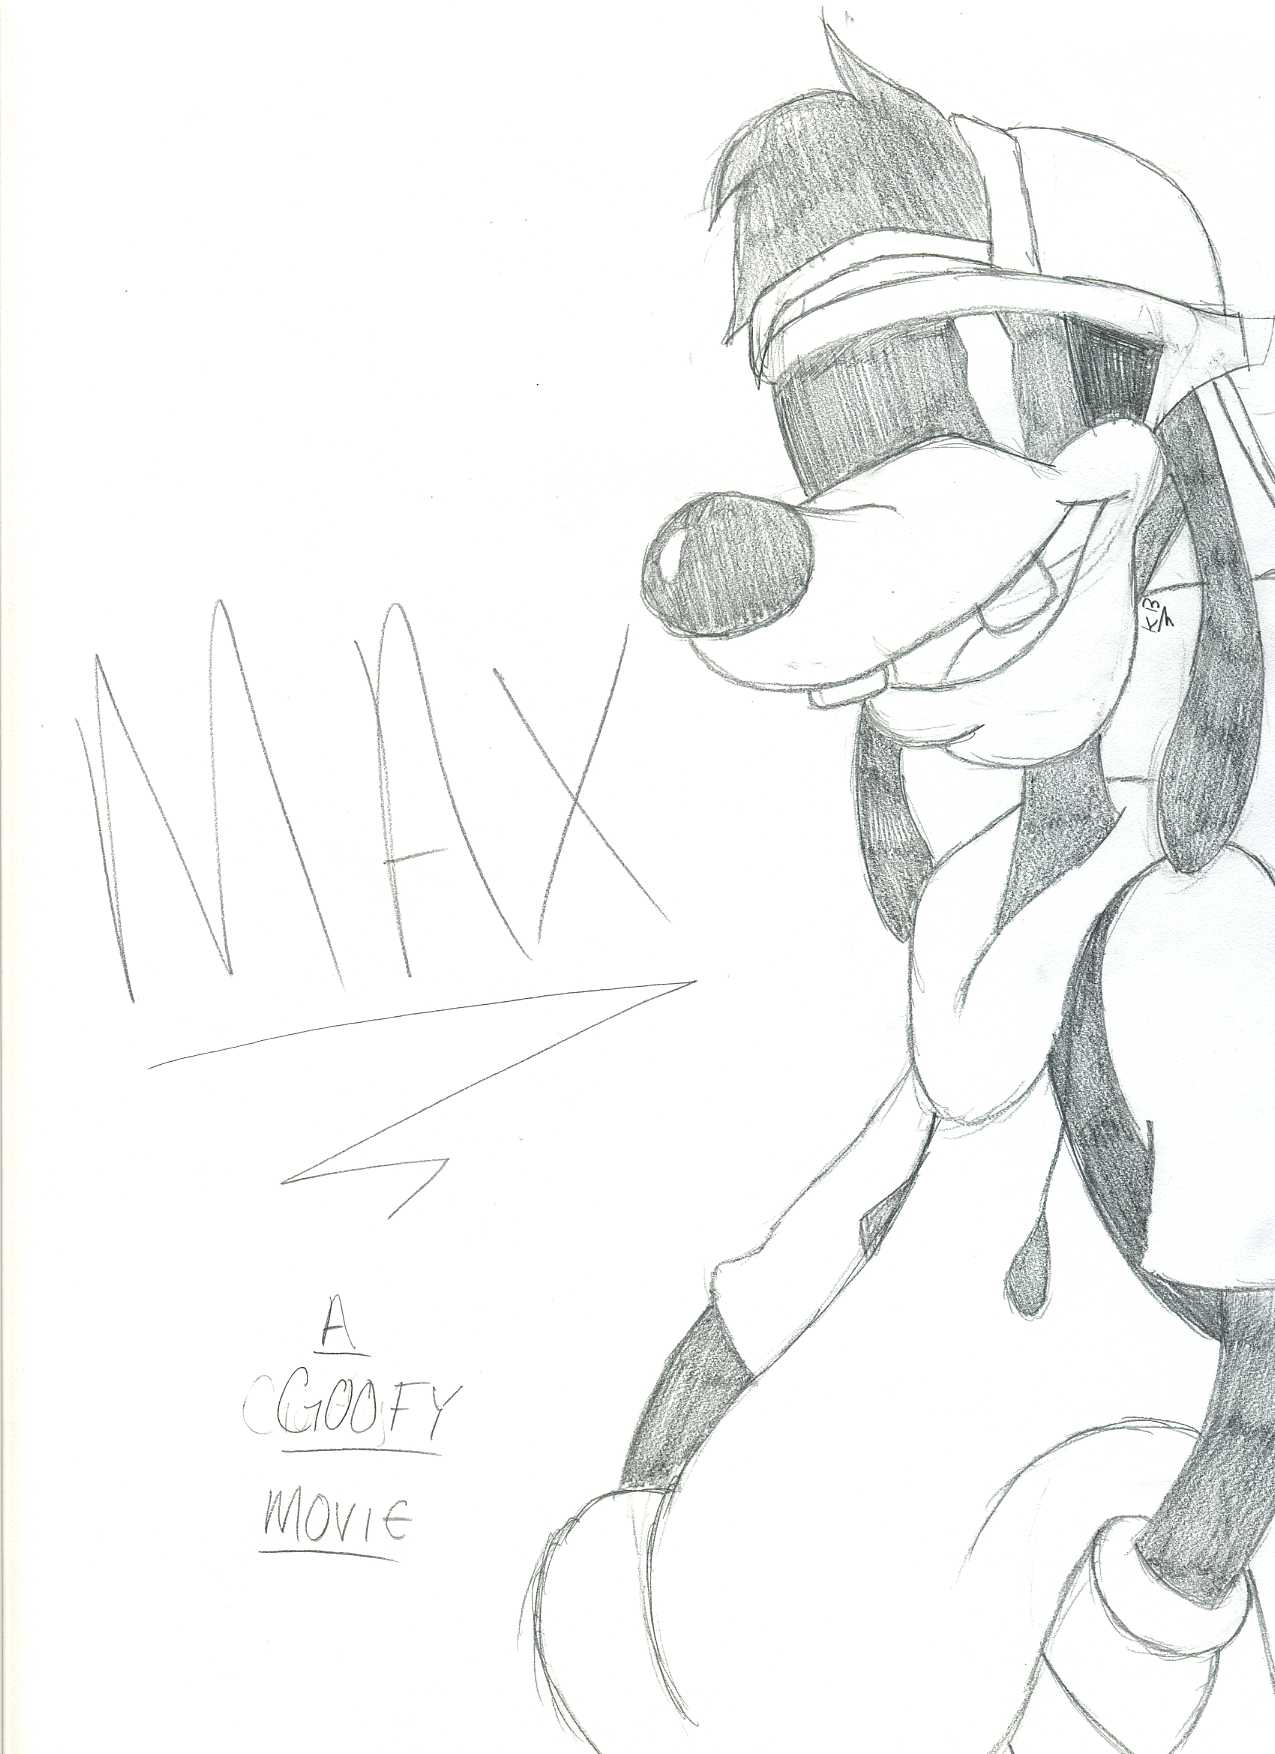 Max Goof by darkangel14